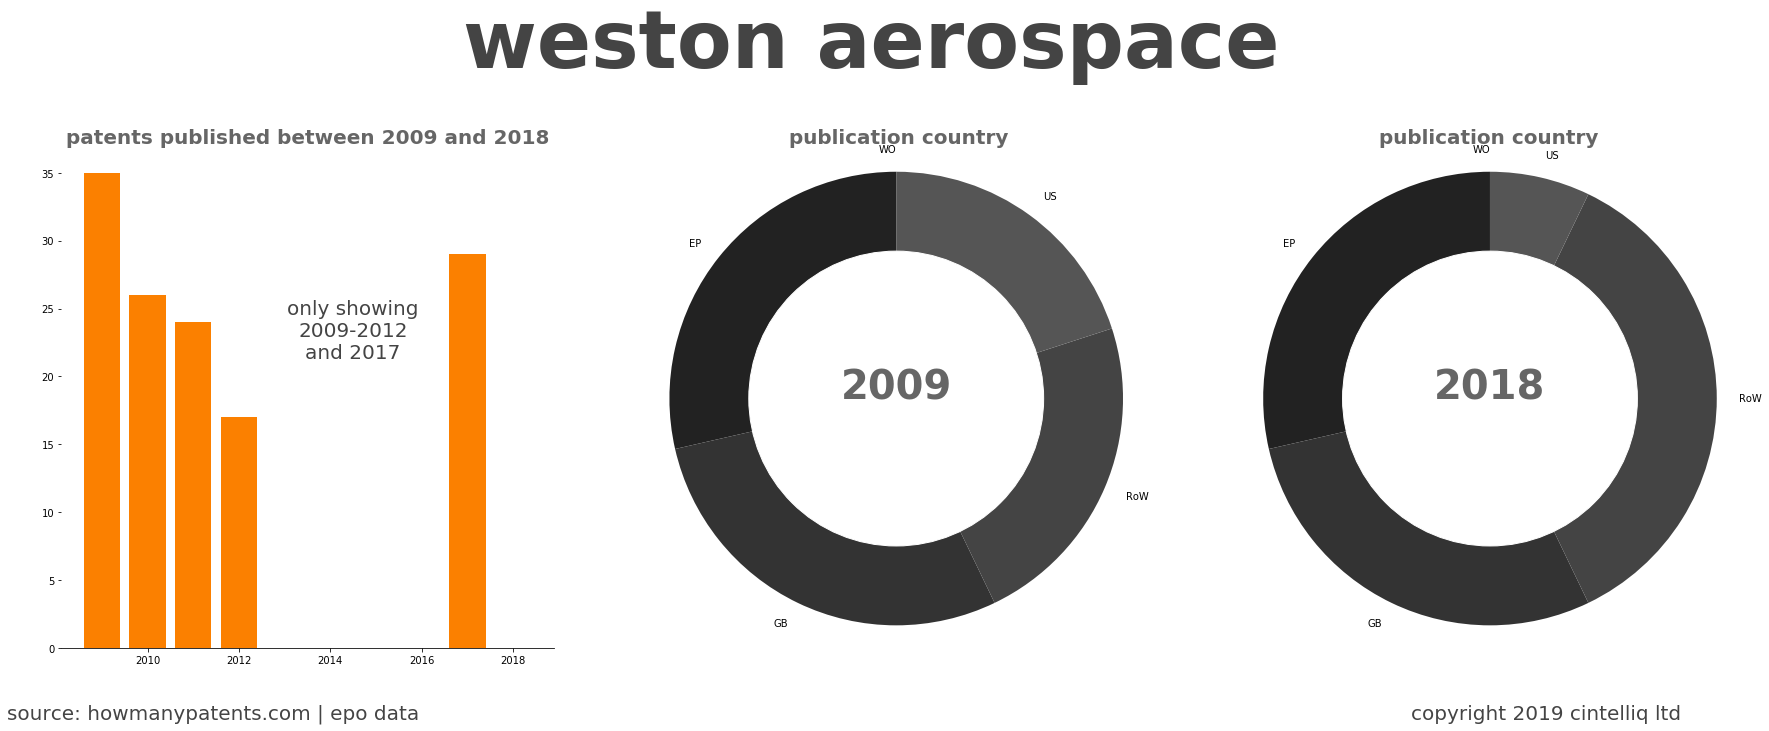 summary of patents for Weston Aerospace